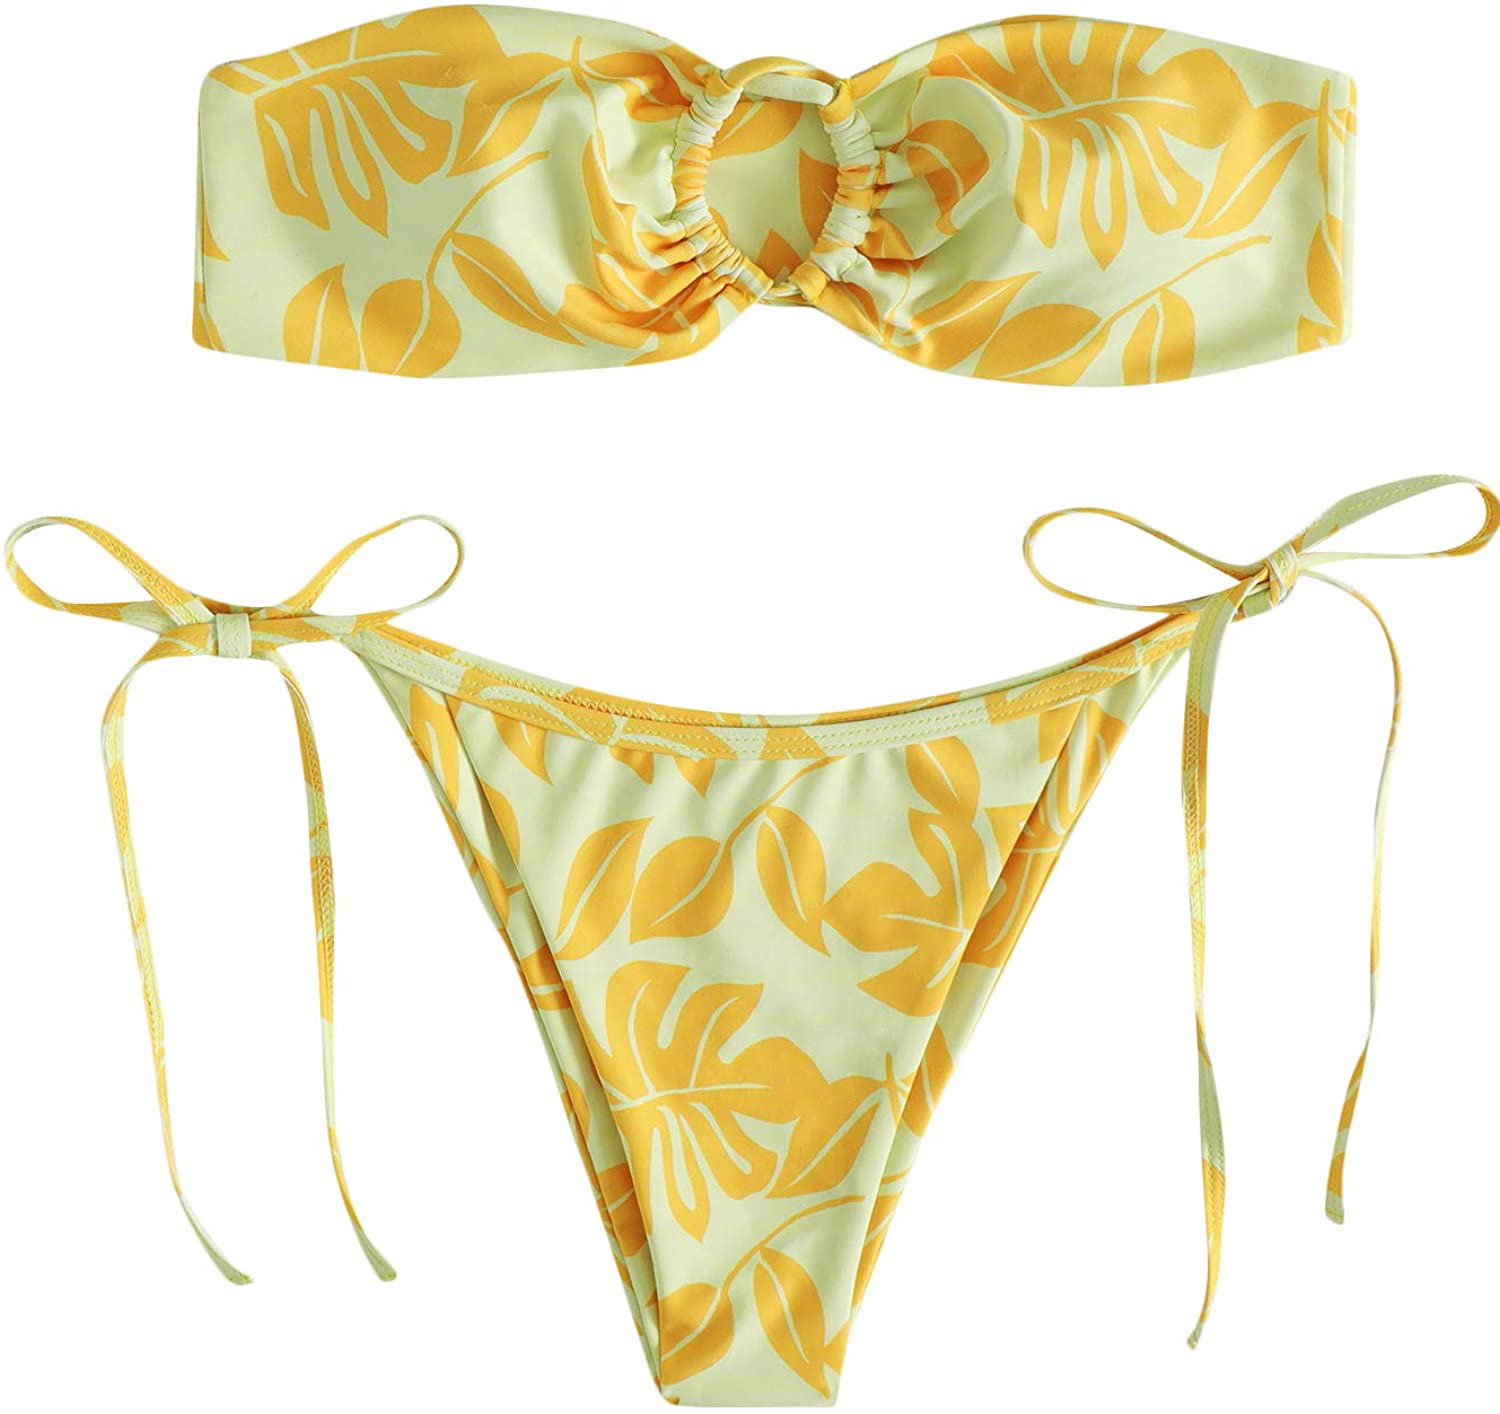 SOLY HUX Women's Floral Print Tie Front Bikini Bathing Suit 2 Piece Swimsuits